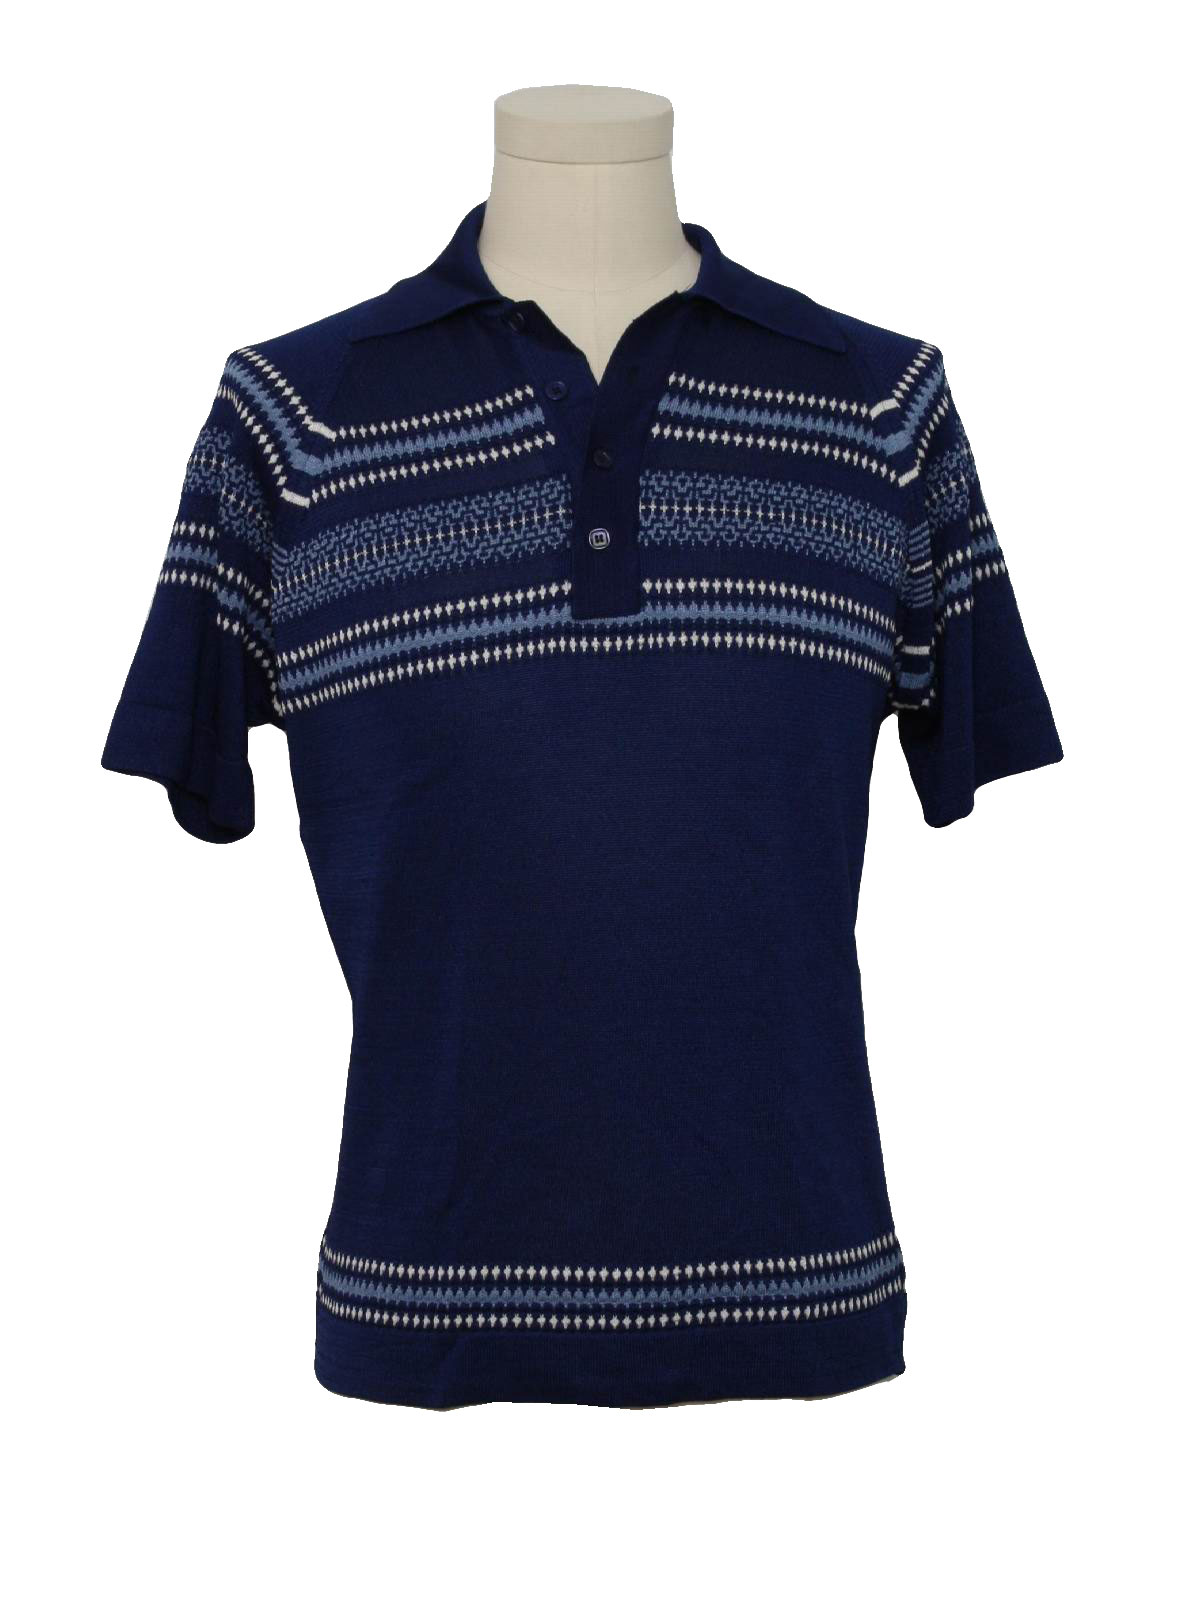 Download 70s Retro Knit Shirt: 70s -Puritan- Mens navy blue ...